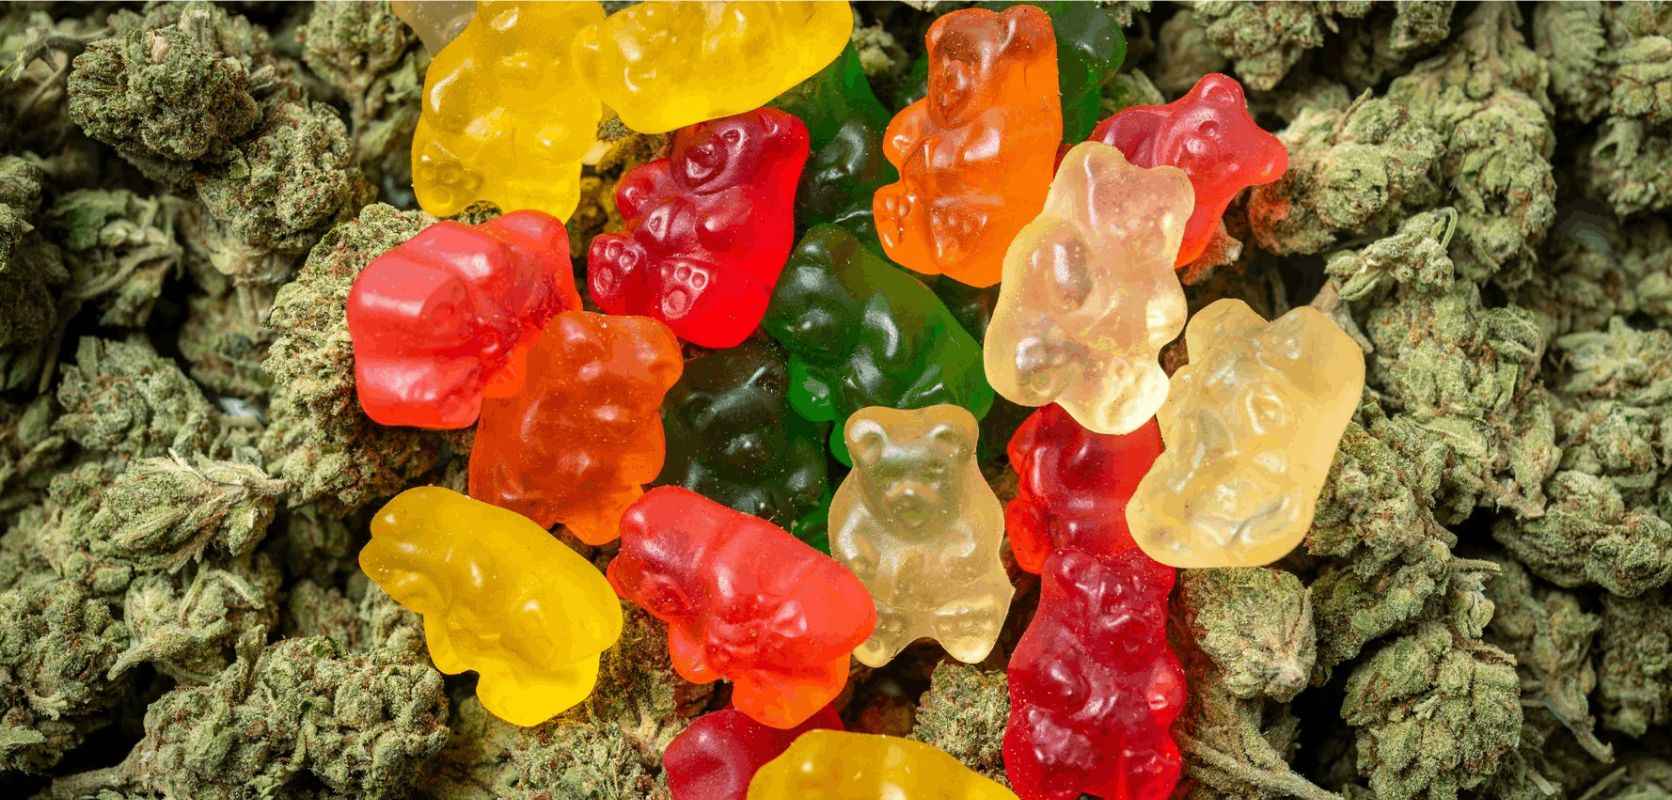 THC gummies are edible candies infused with tetrahydrocannabinol (THC), the main psychoactive component of marijuana. 